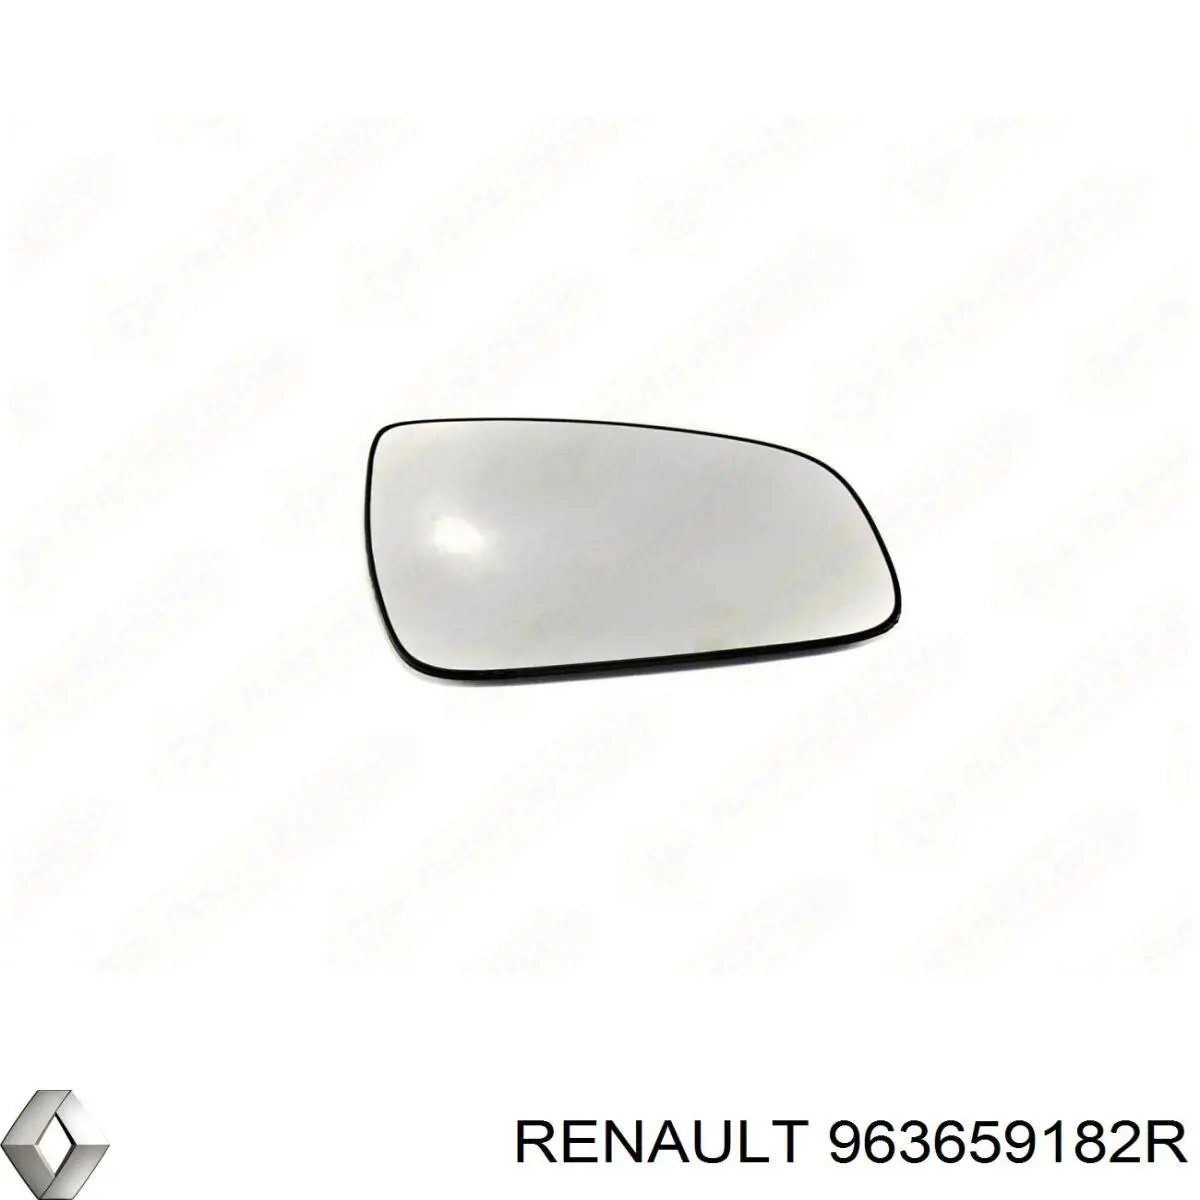 963659182R Renault (RVI) cristal de espejo retrovisor exterior derecho